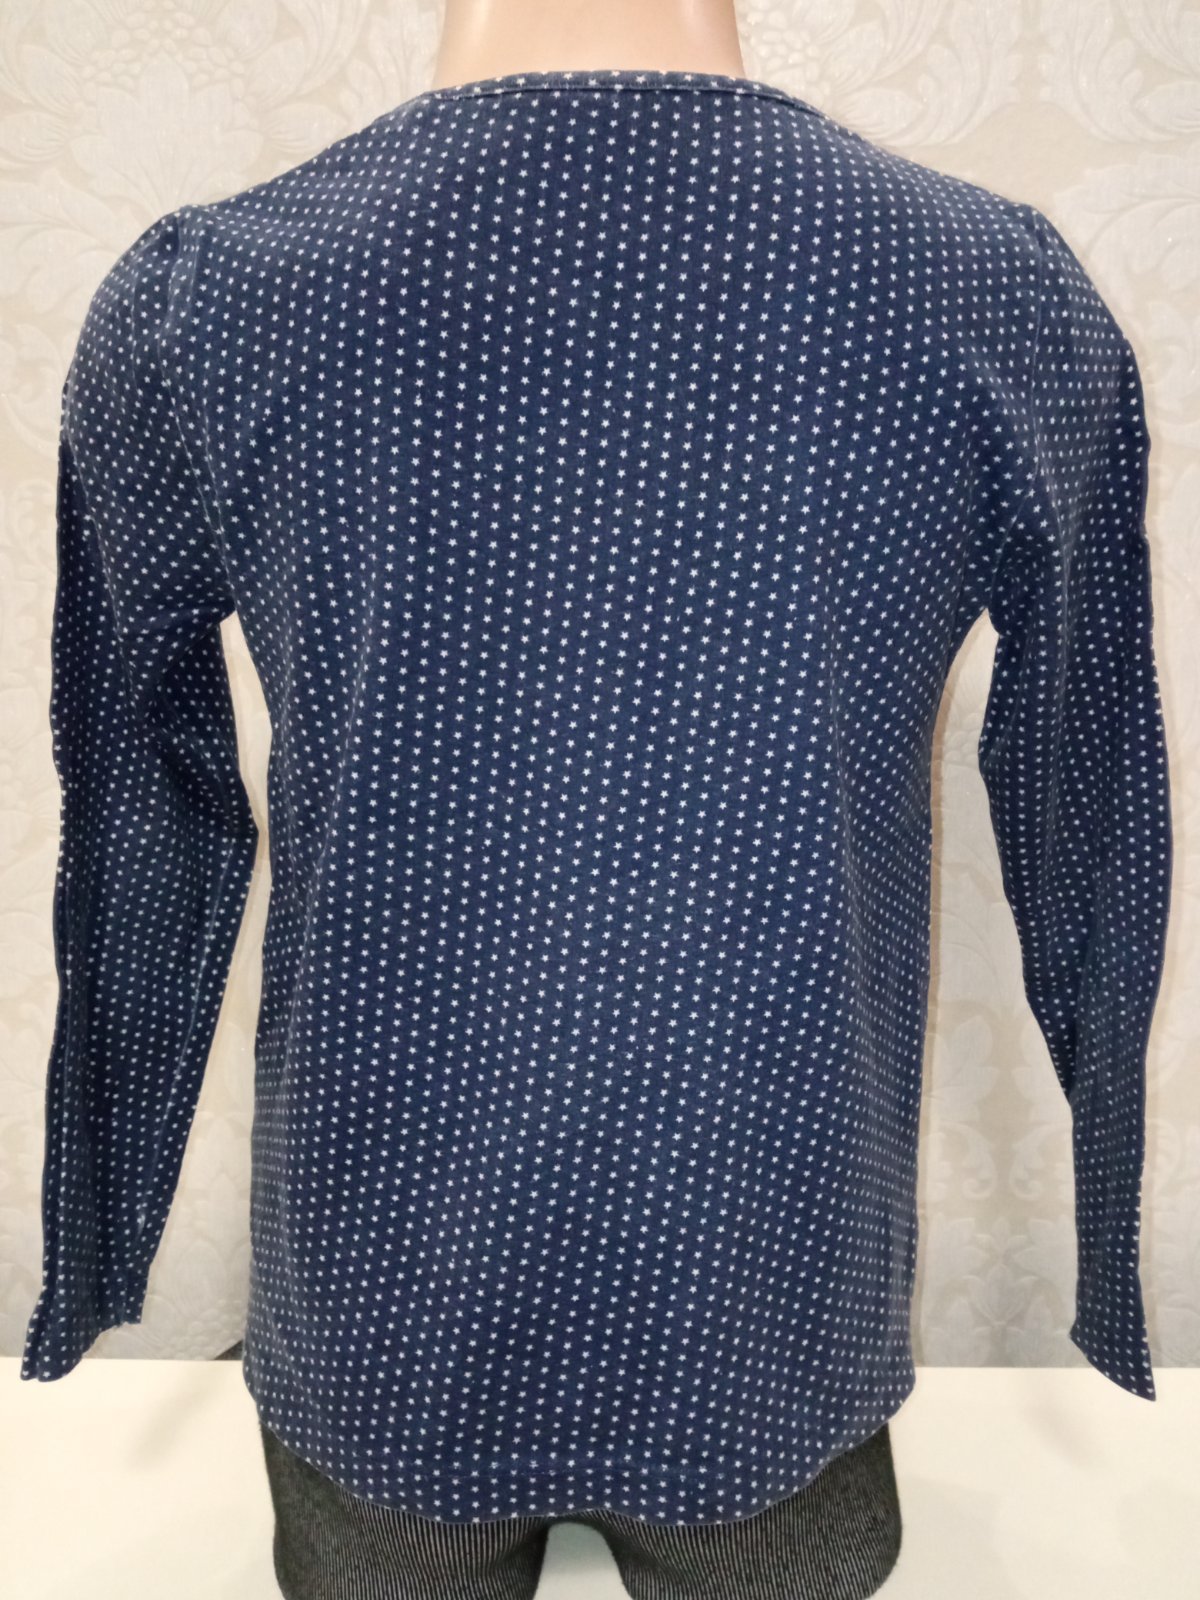 Modro-biele tričko s hviezdičkami a mašličkou (110-116)